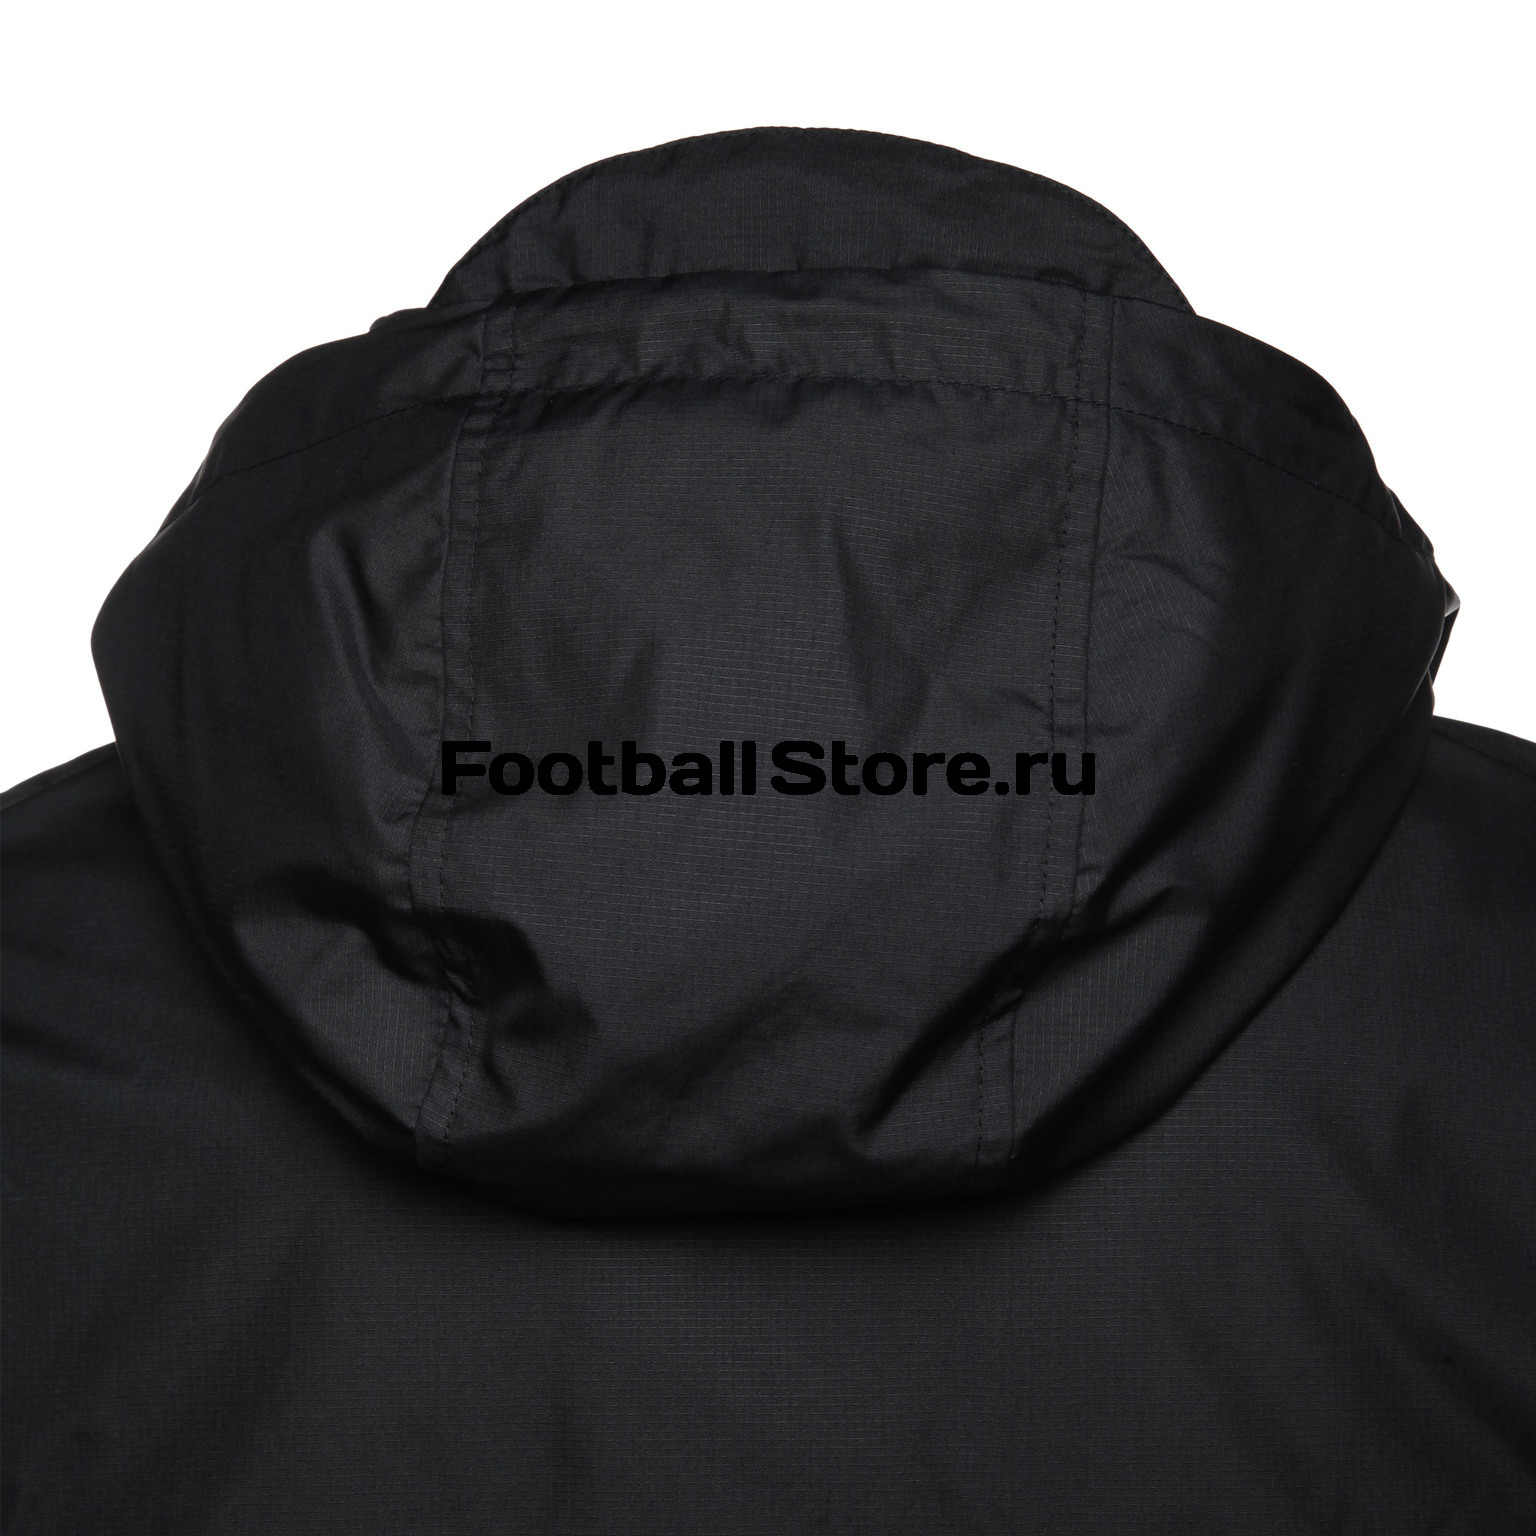 Куртка Nike Academy 18 Rain Jacket 893796-010